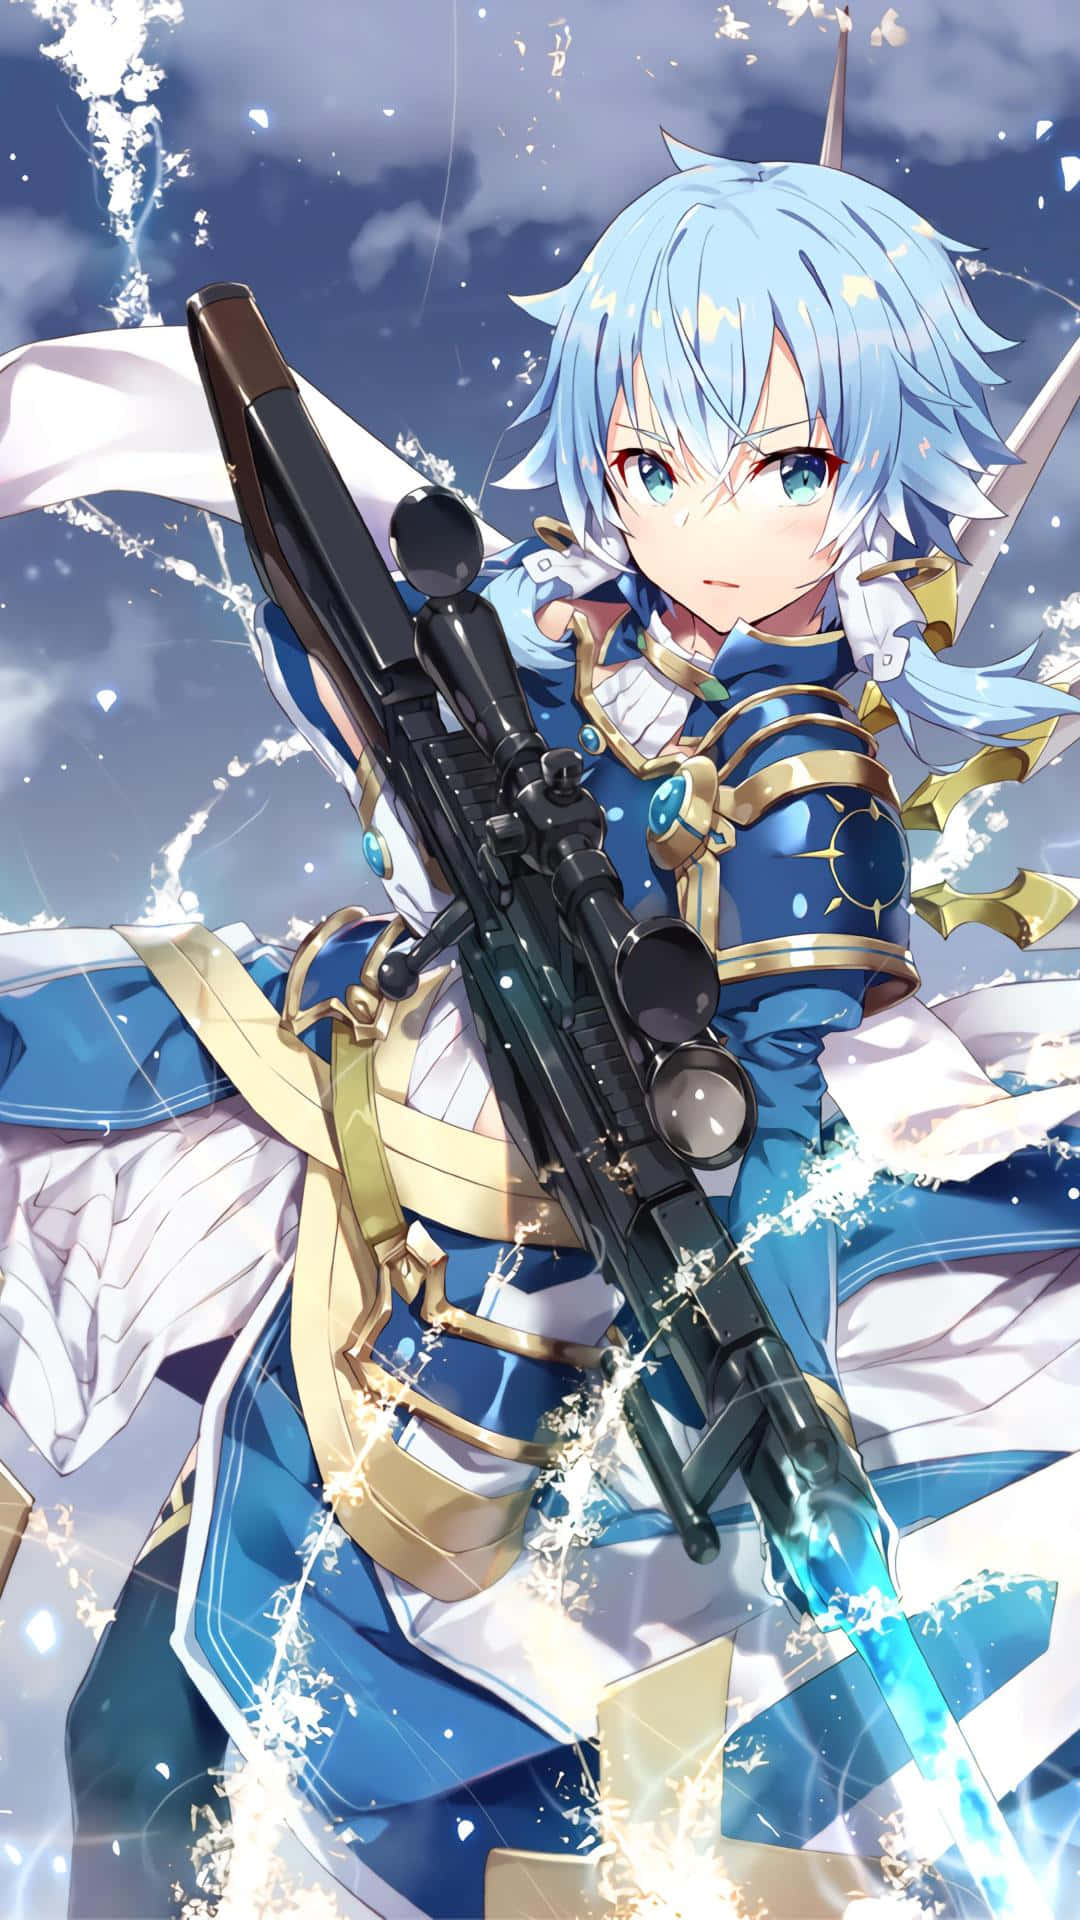 En pige med blåt hår, der holder et gevær Wallpaper